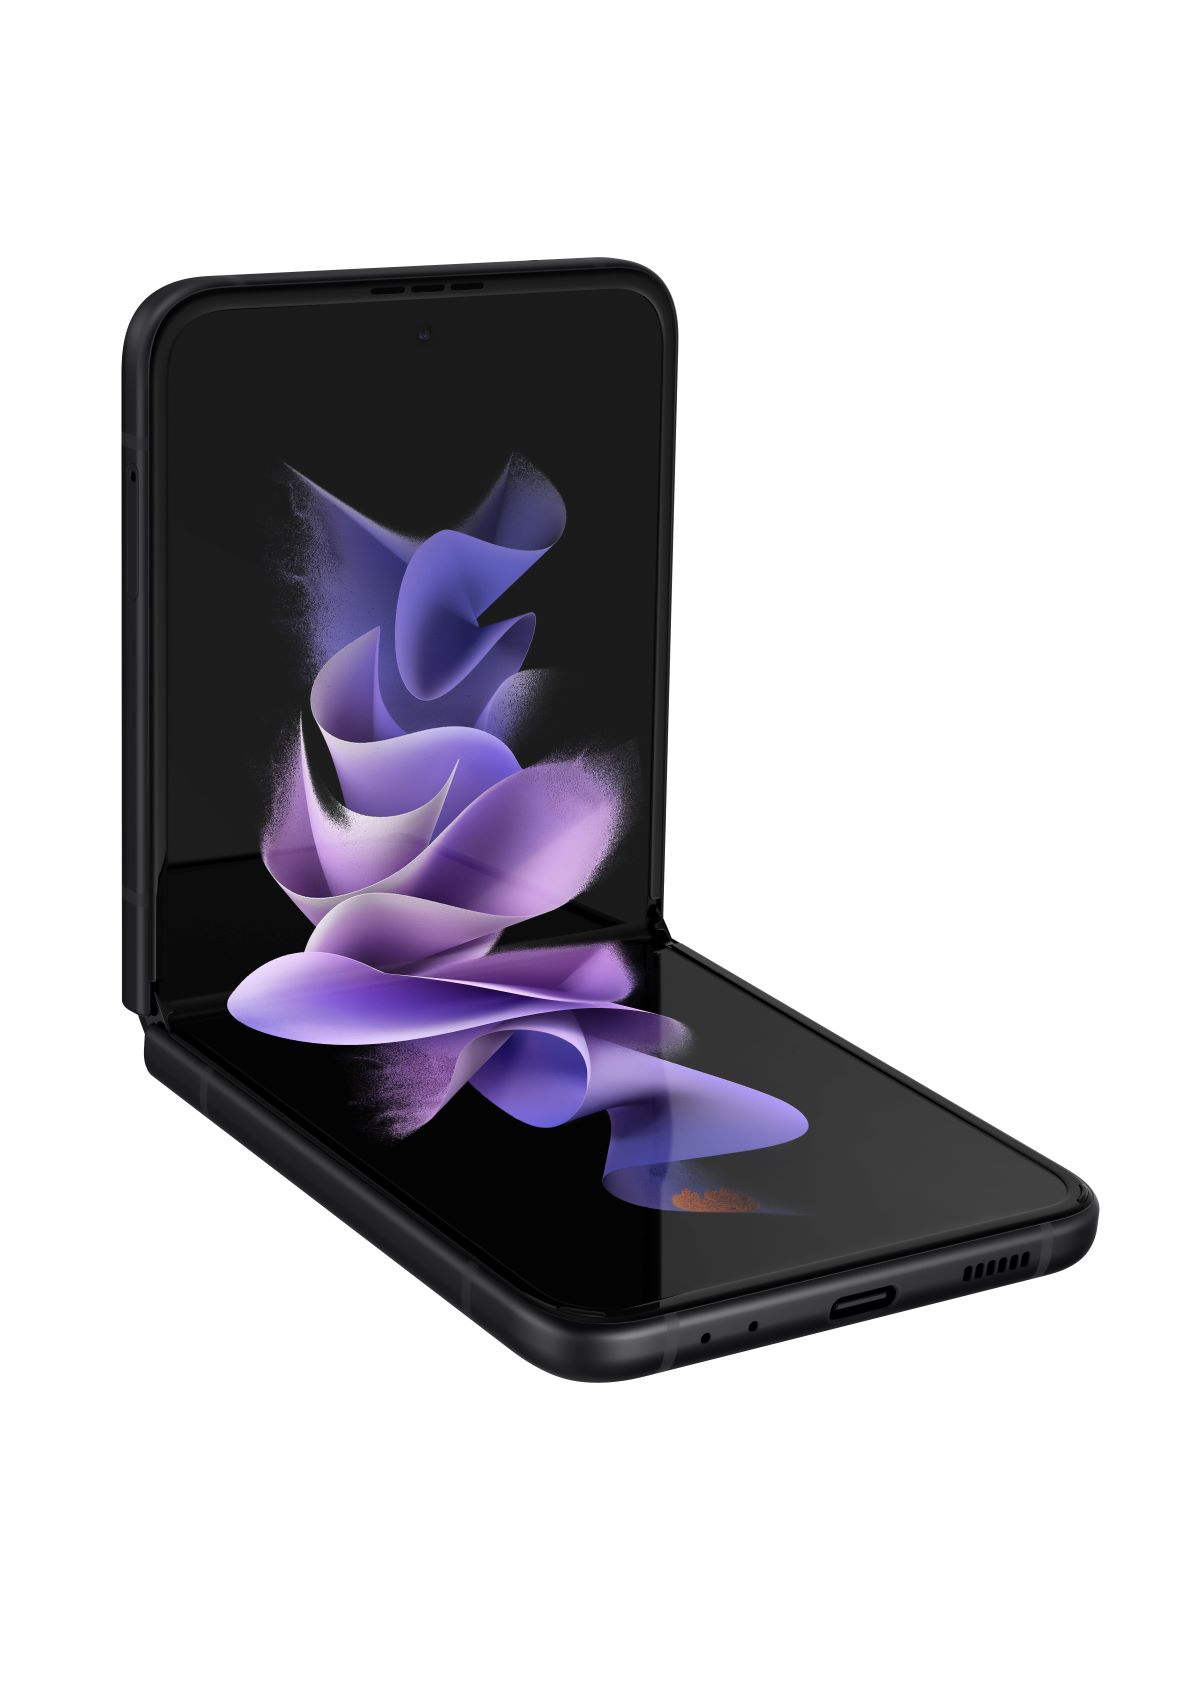 VZ Samsung Galaxy Z Flip3 5G, Black, 128GB - image 1 of 3